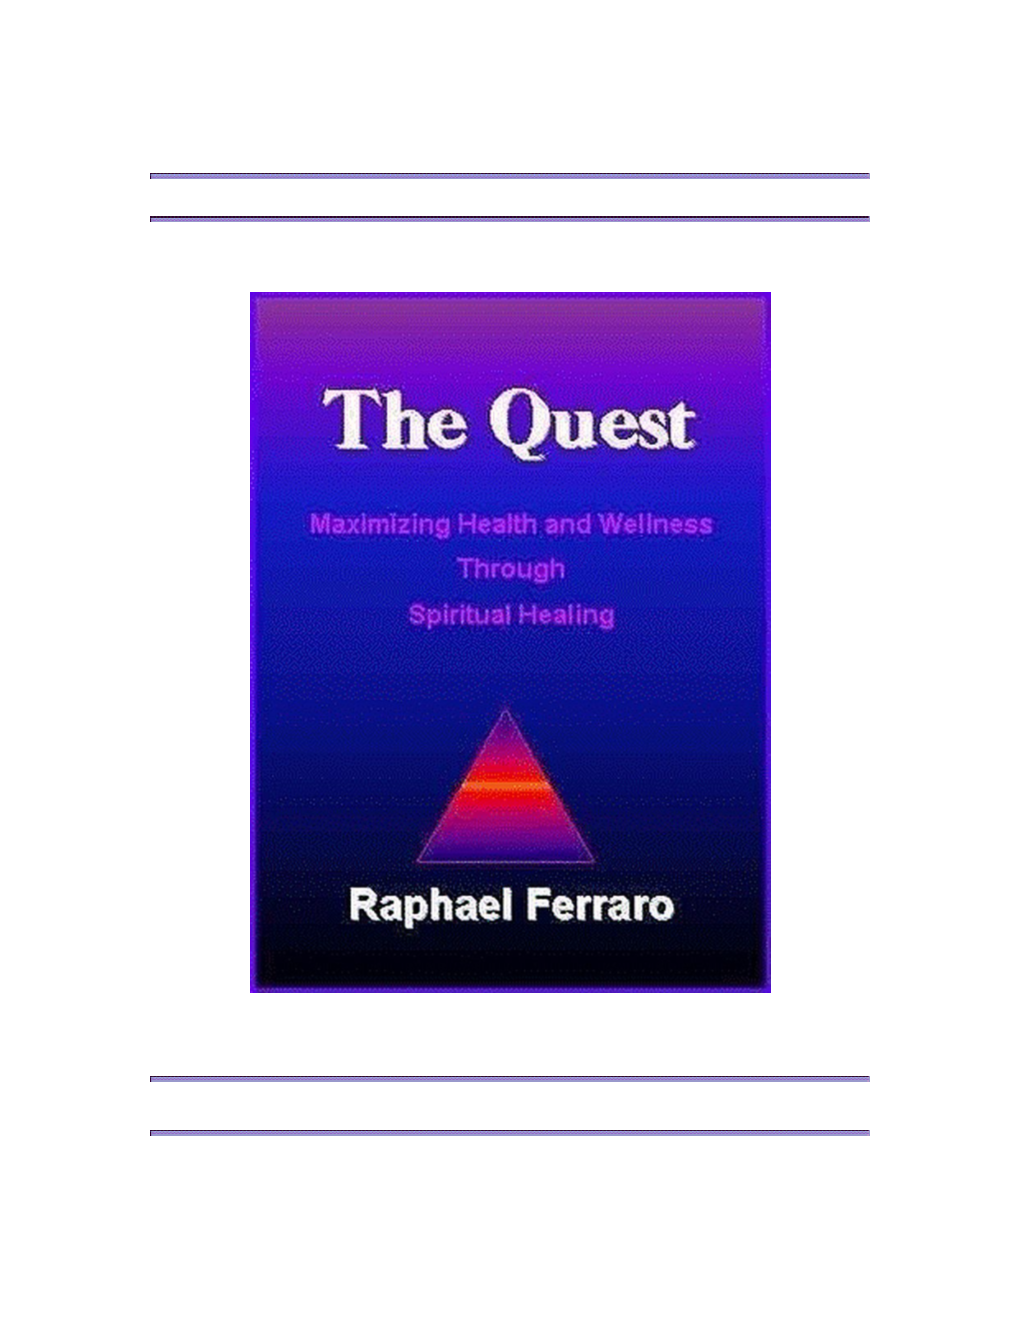 The Quest Maximizing Health and Wellness Through Spiritual Healing